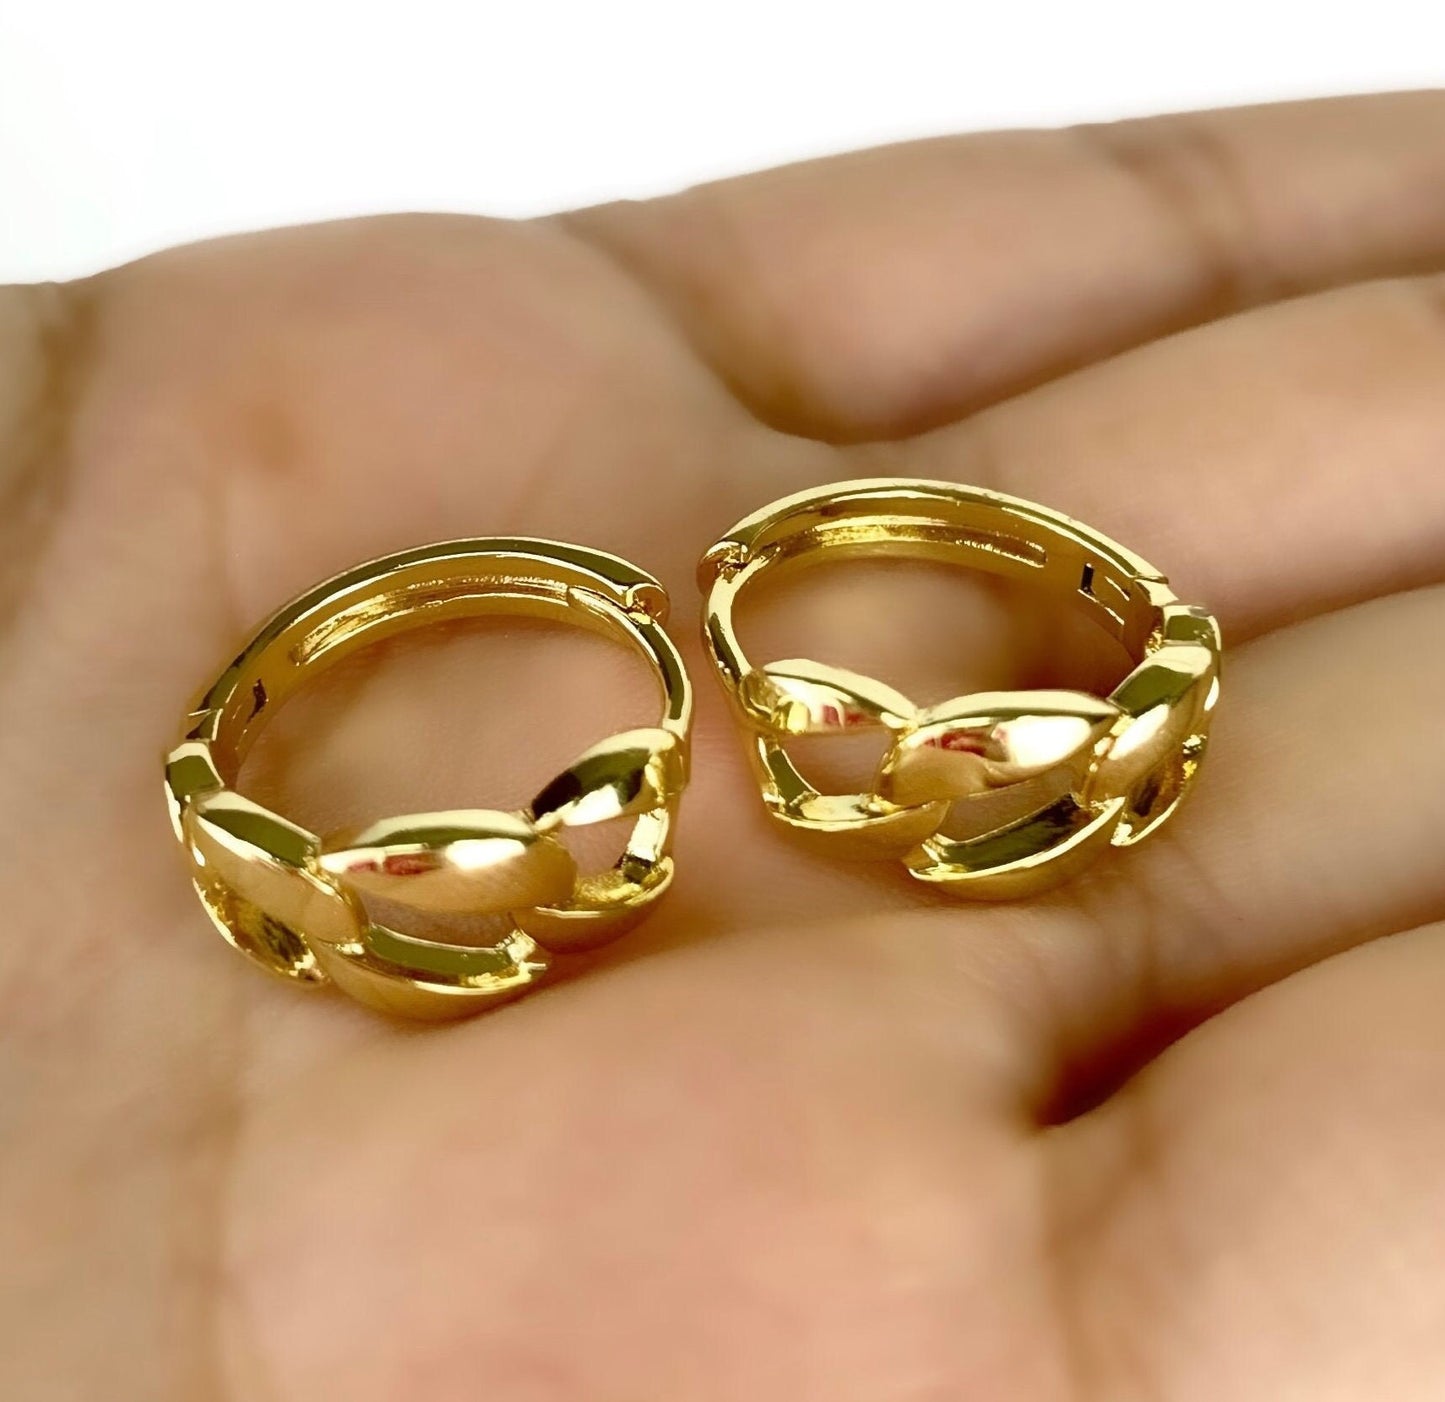 18k Gold Filled 17mm Large Cuban Link Huggie Earrings Wholesale Jewelry Supplies